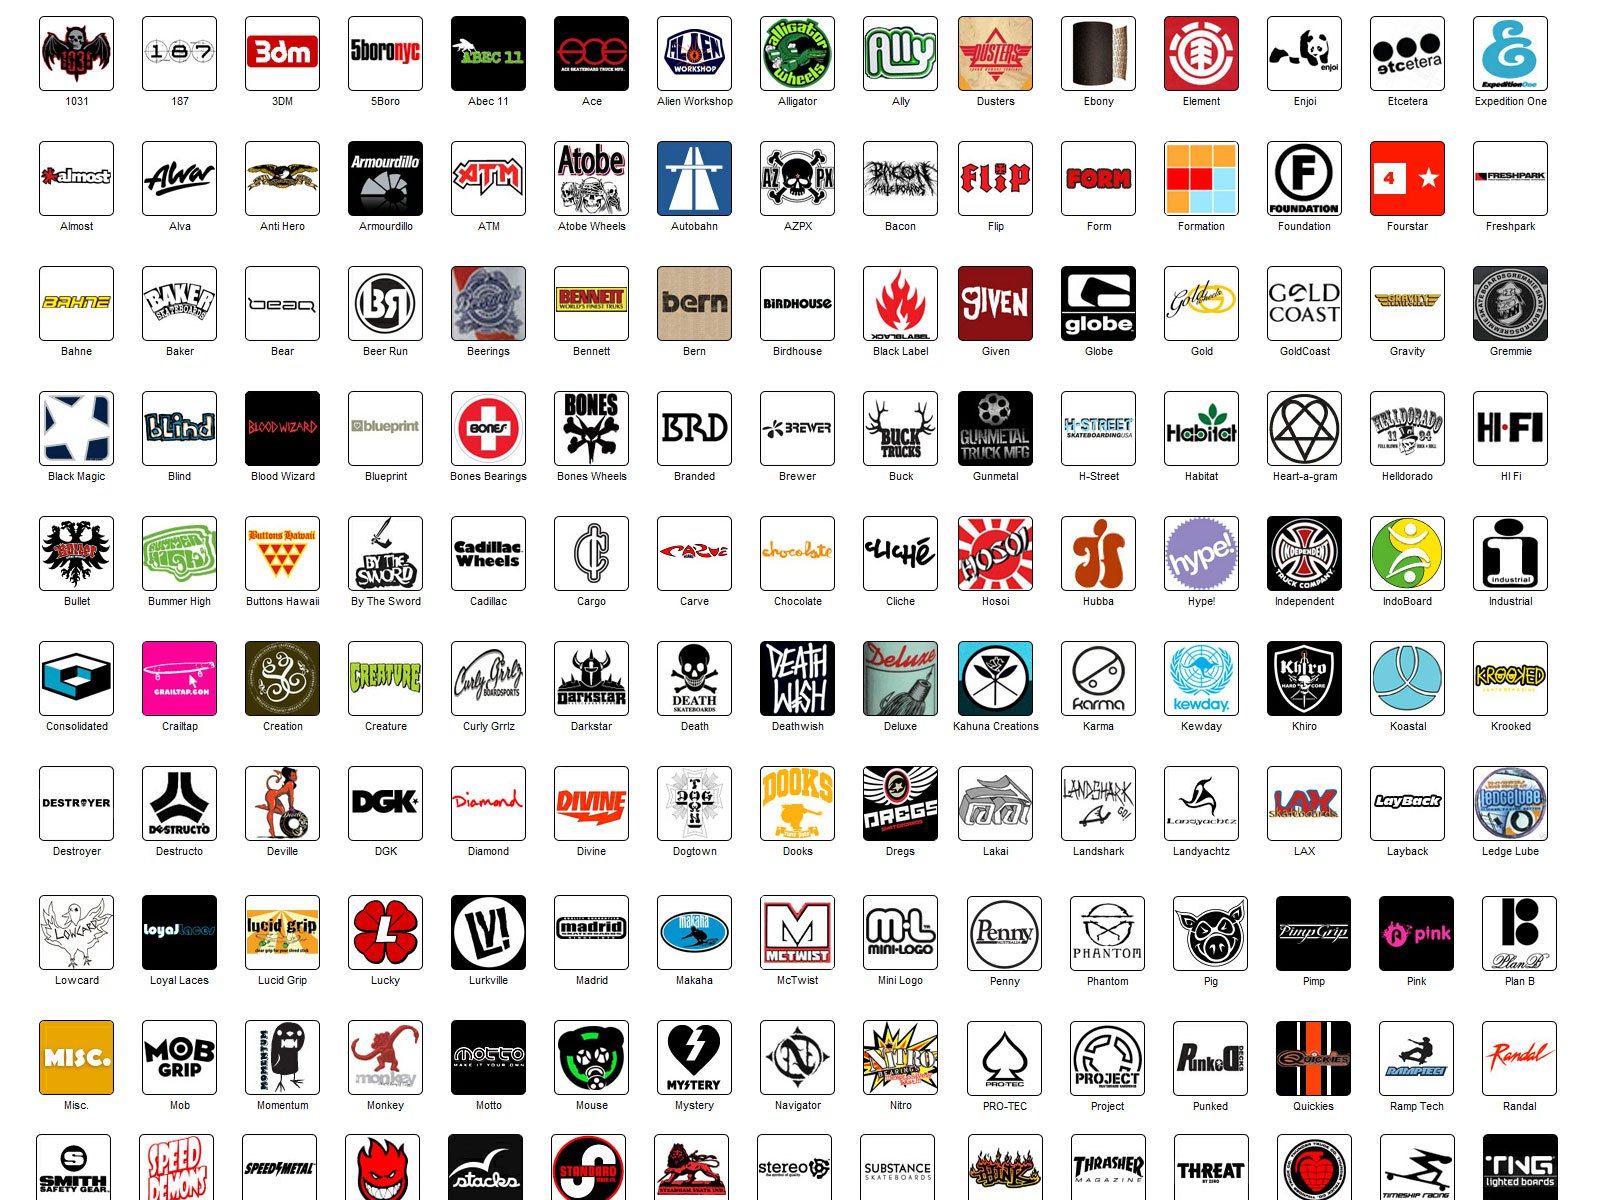 lists of shoe brands